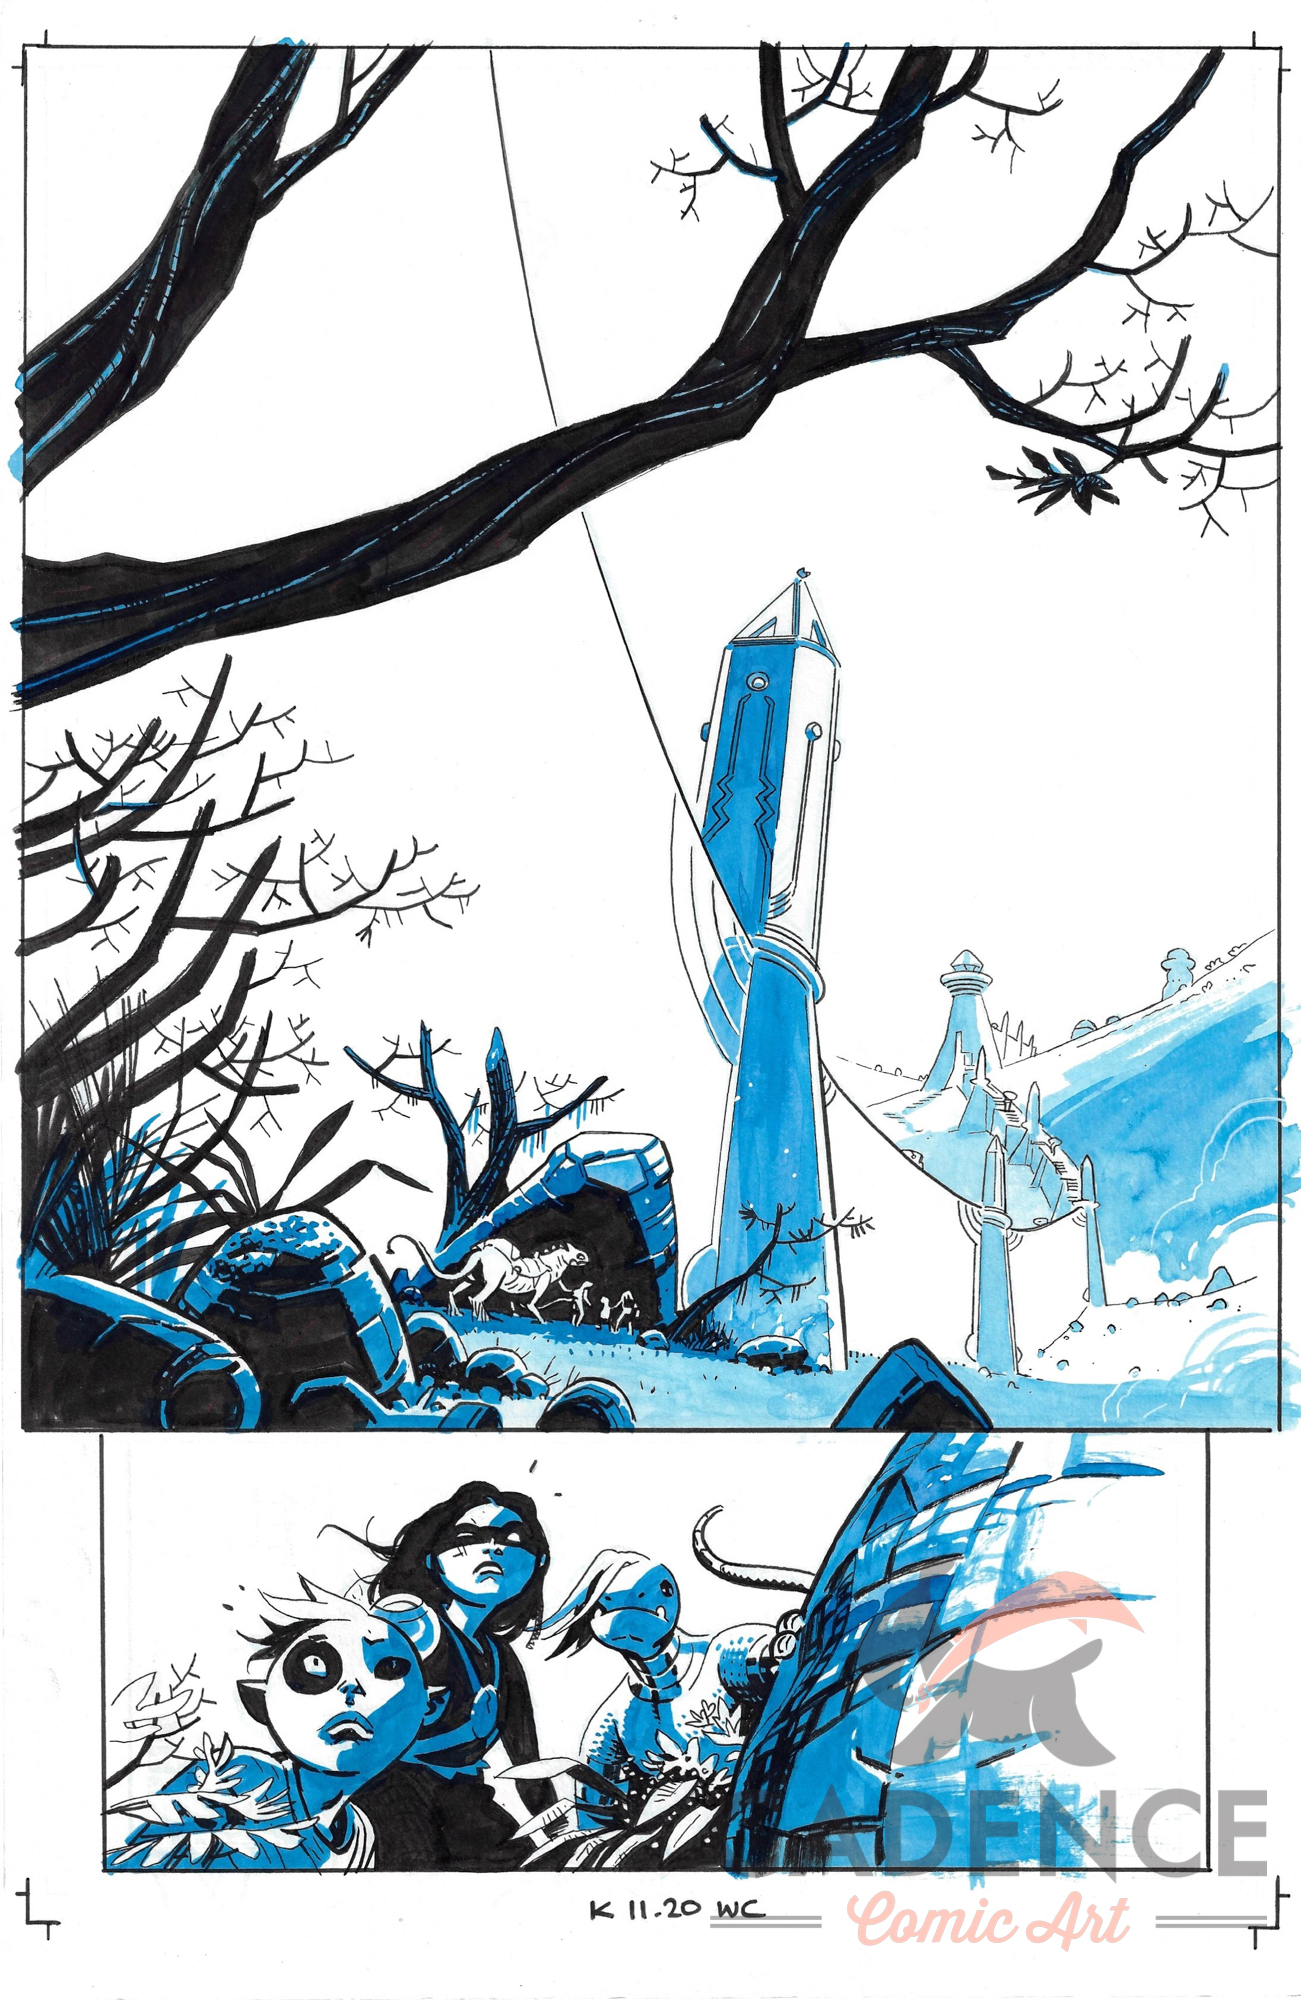 Image of Kaya (Image Comics), Issue 11, Page 20